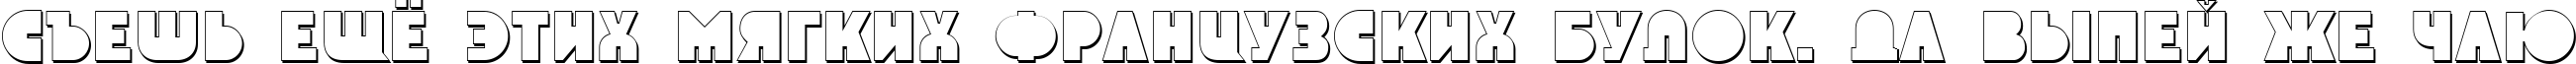 Пример написания шрифтом a_GrotoSh текста на русском